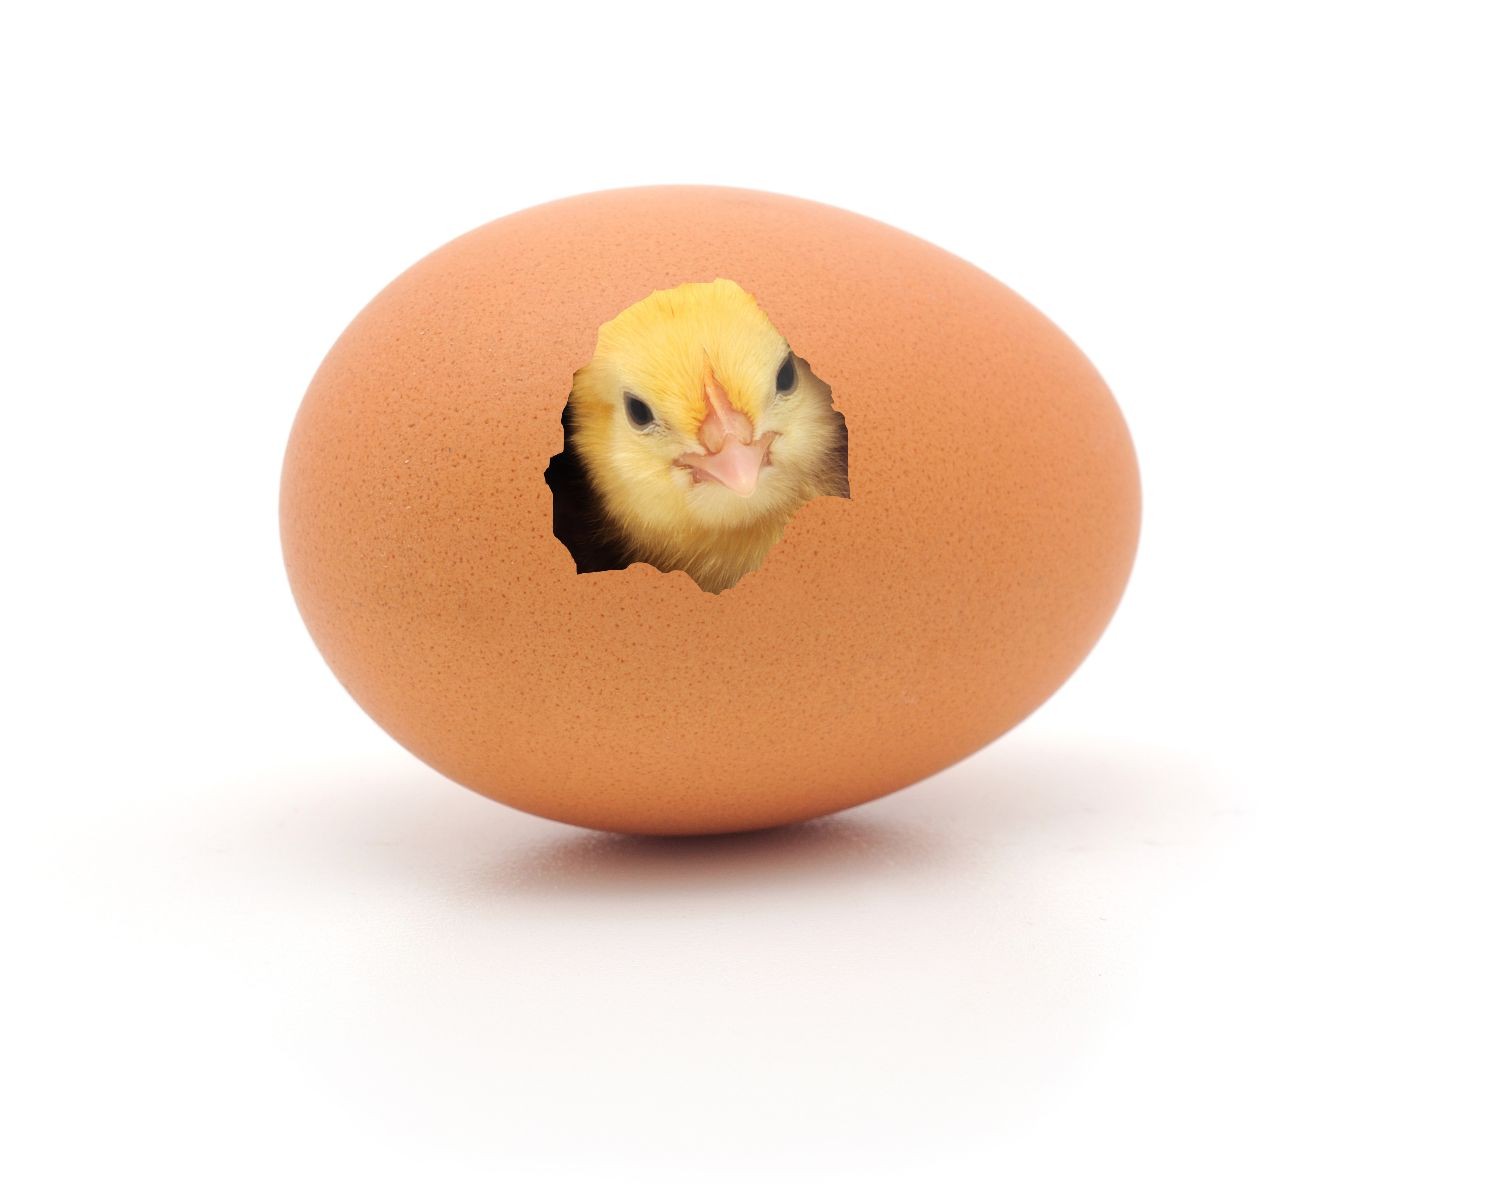 Pollito saliendo de un huevo